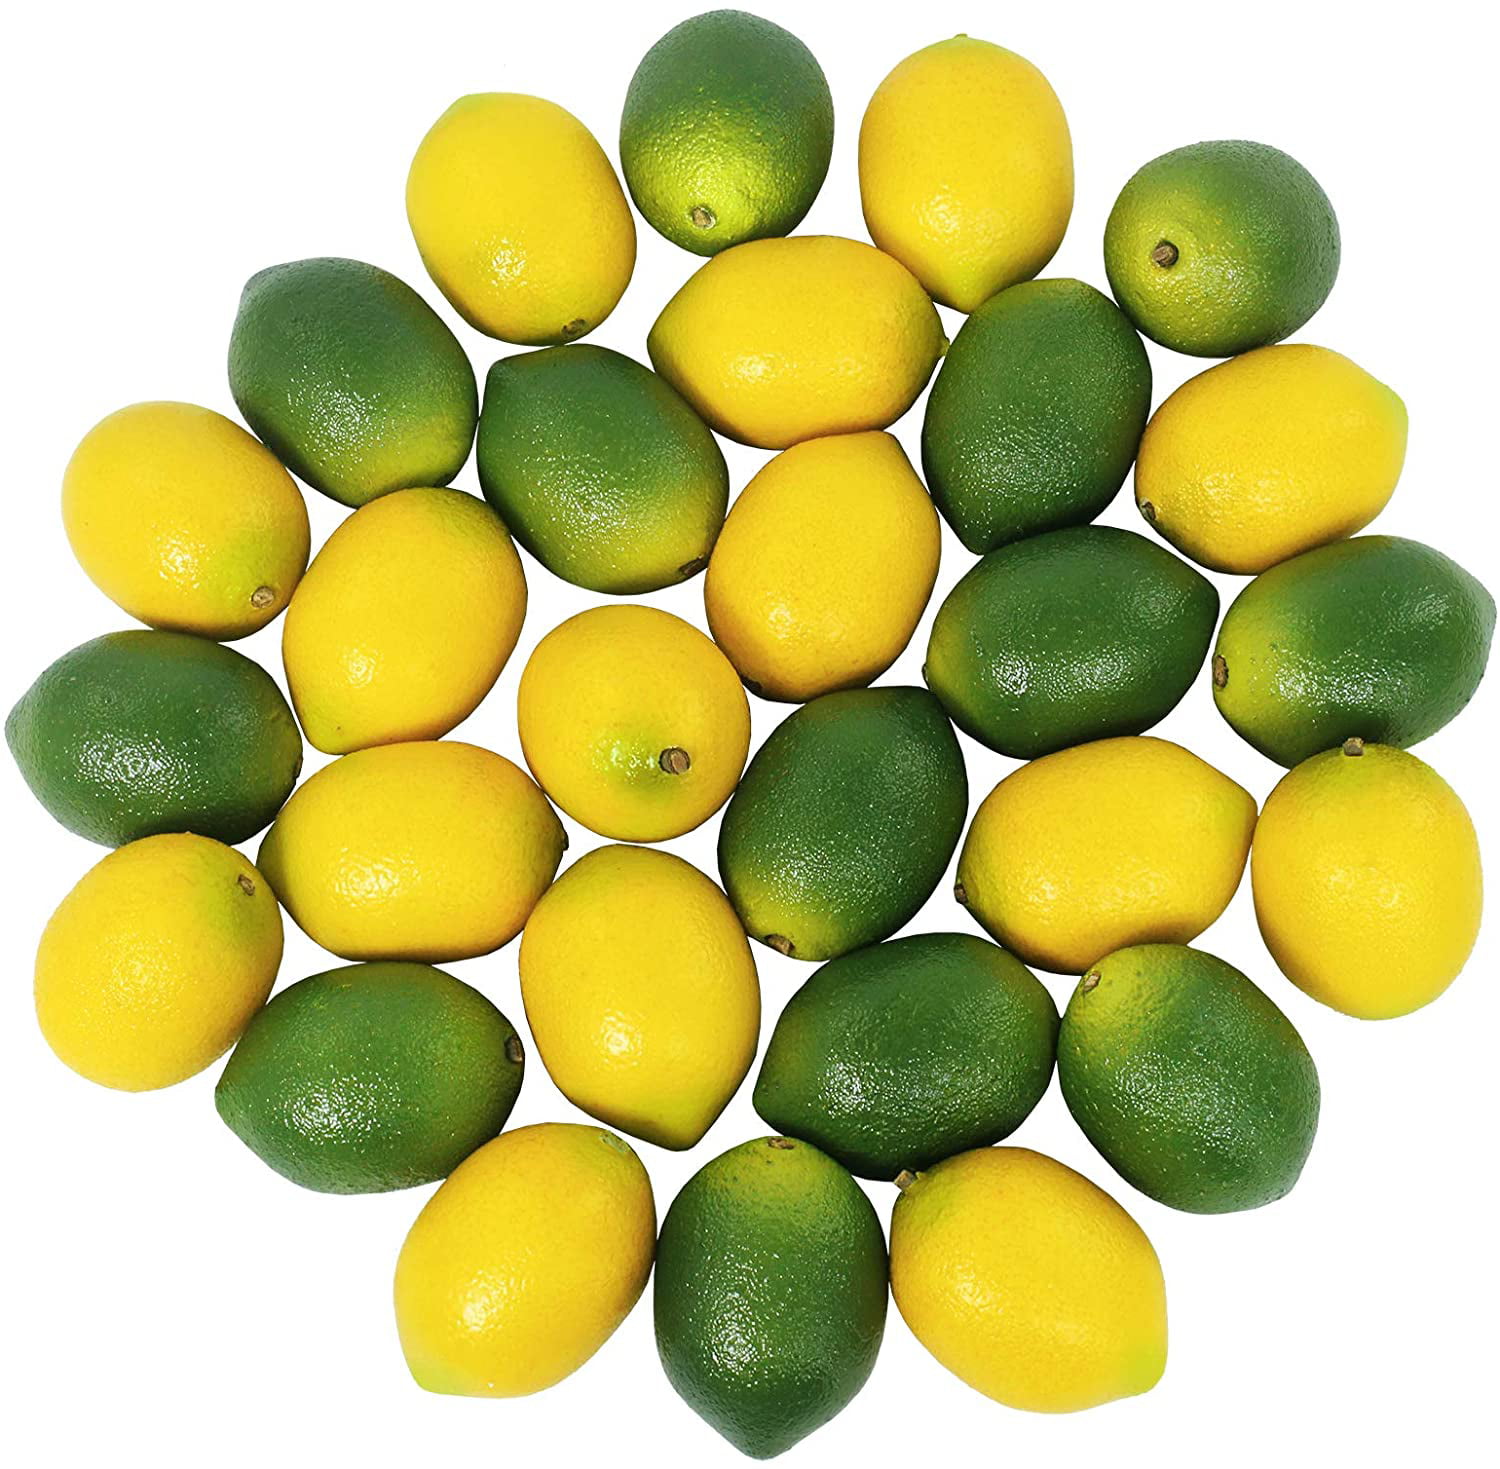 Artificial Yellow Lemon Model PVC False Orange Home Kitchen Party Fruits Decor 